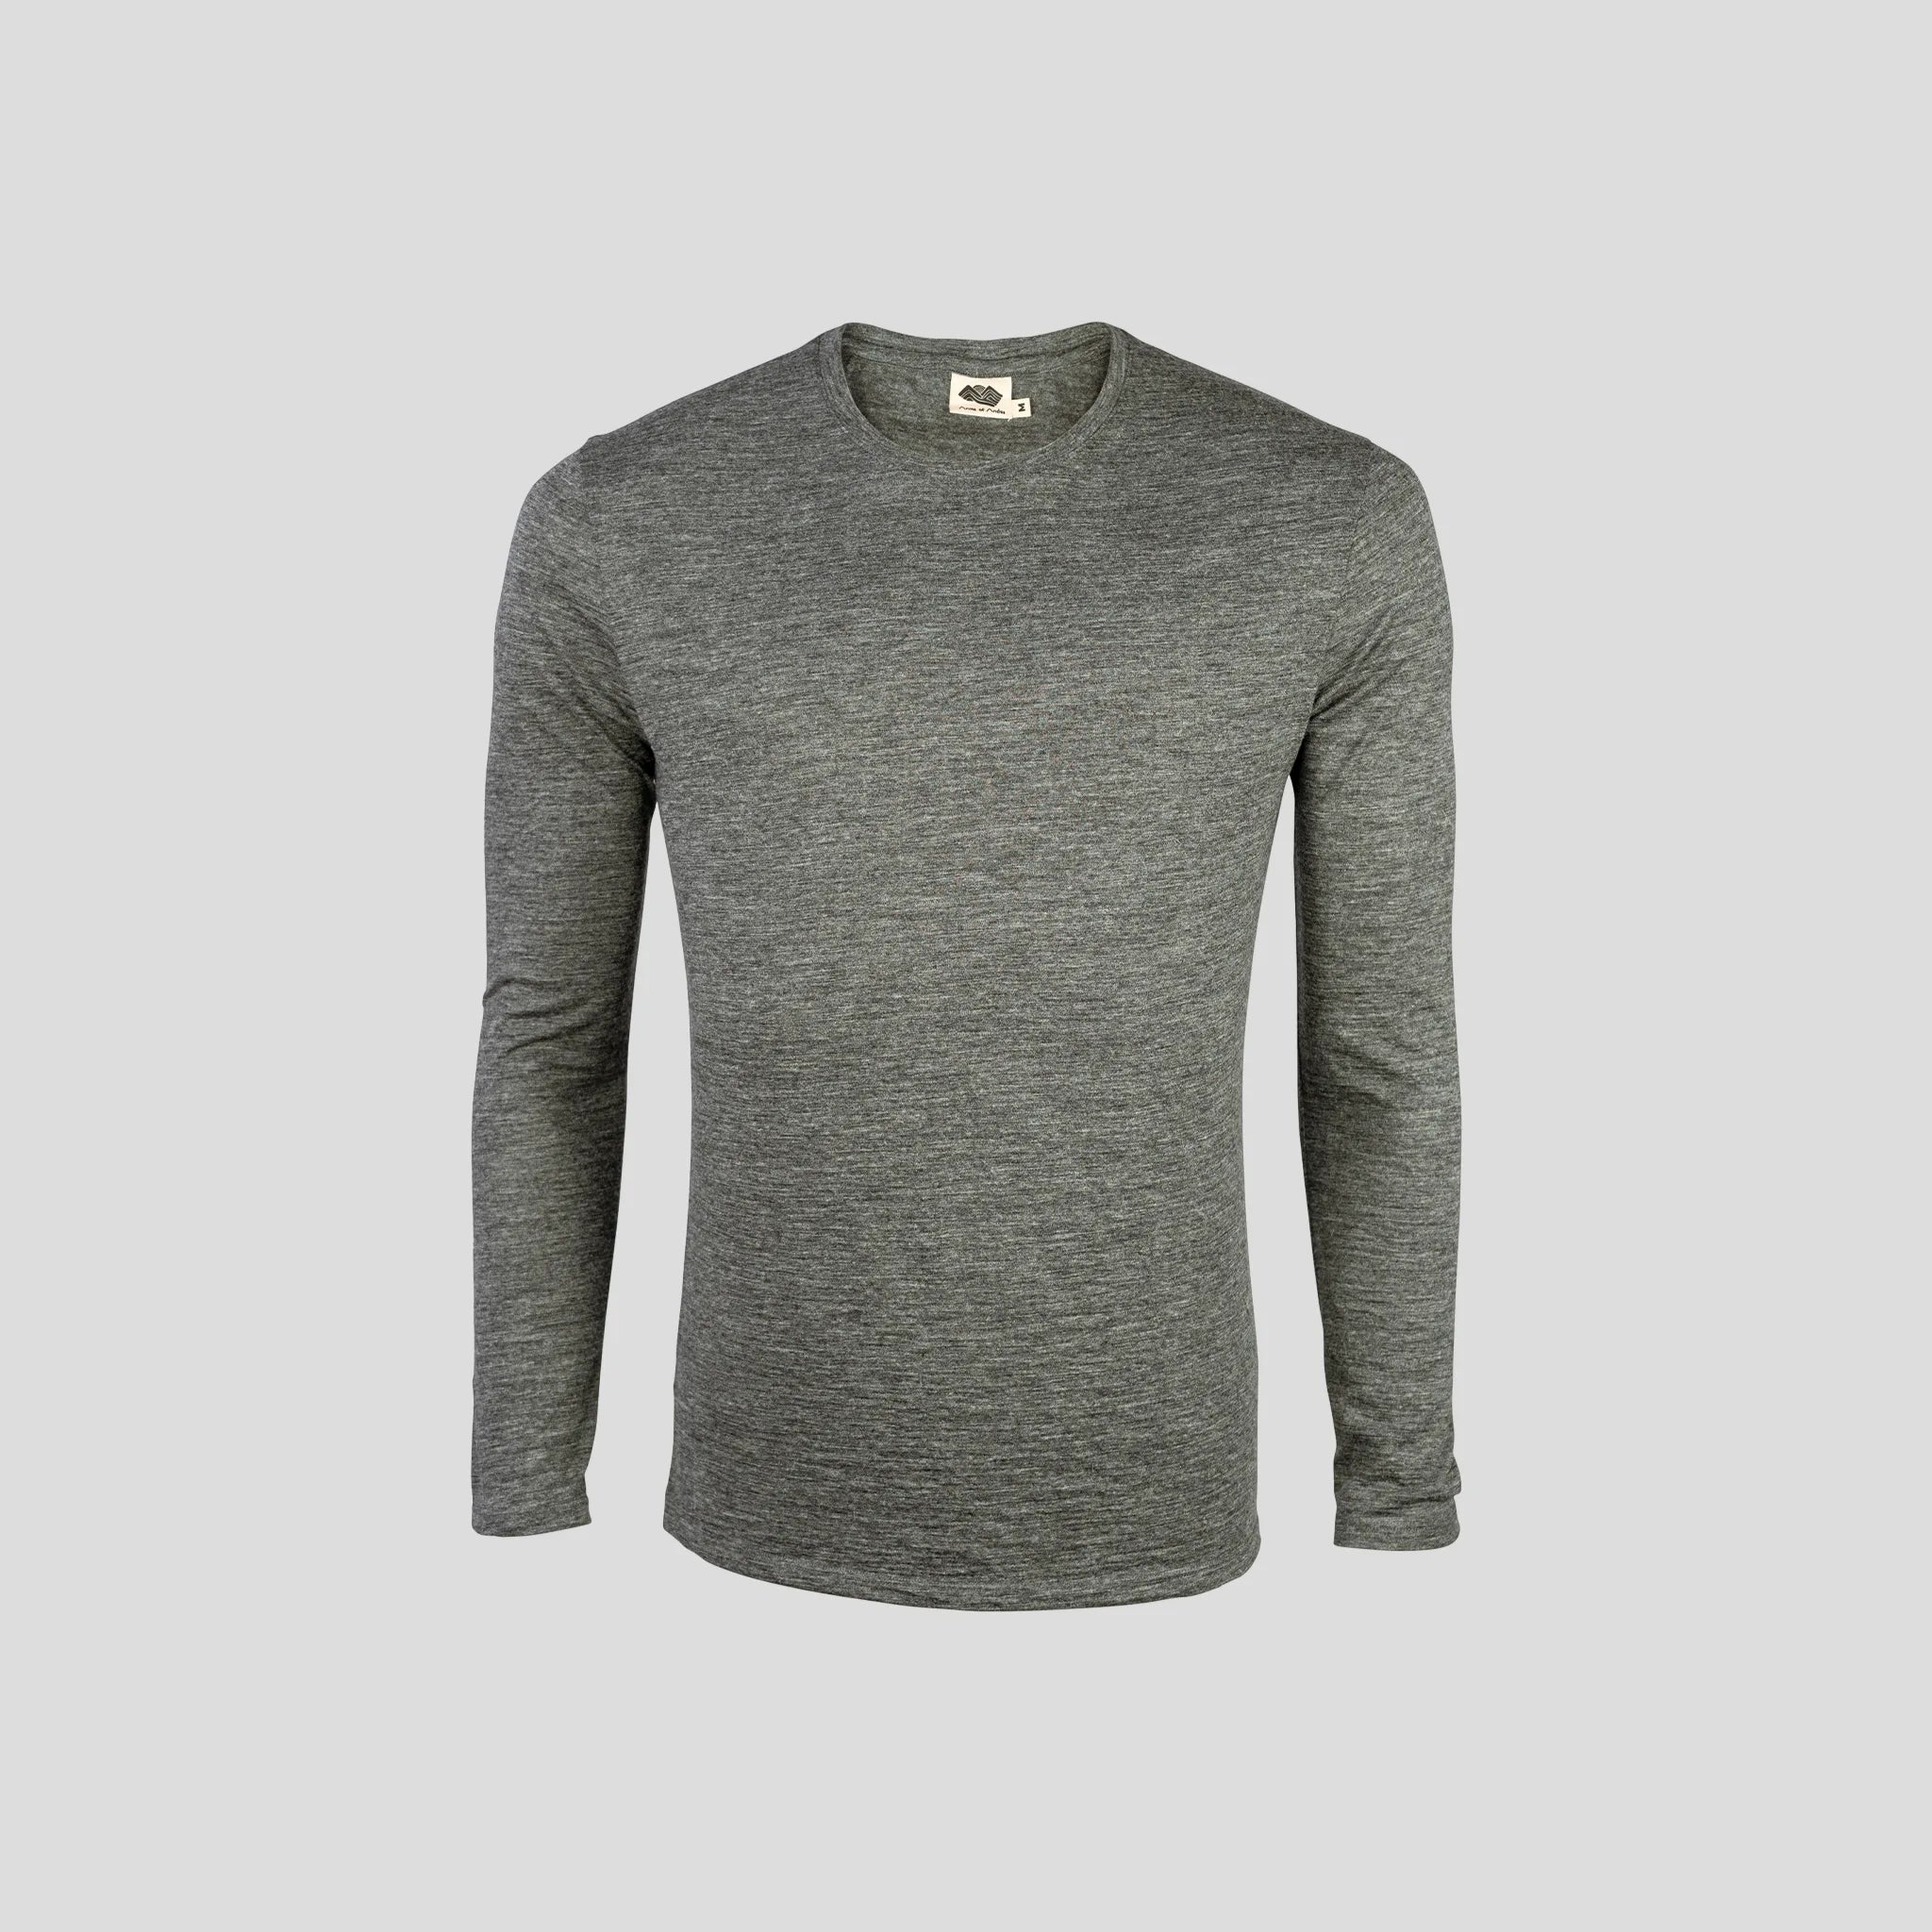 3 Pack - Men's Alpaca Wool Long Sleeve Shirt: 160 Ultralight cover